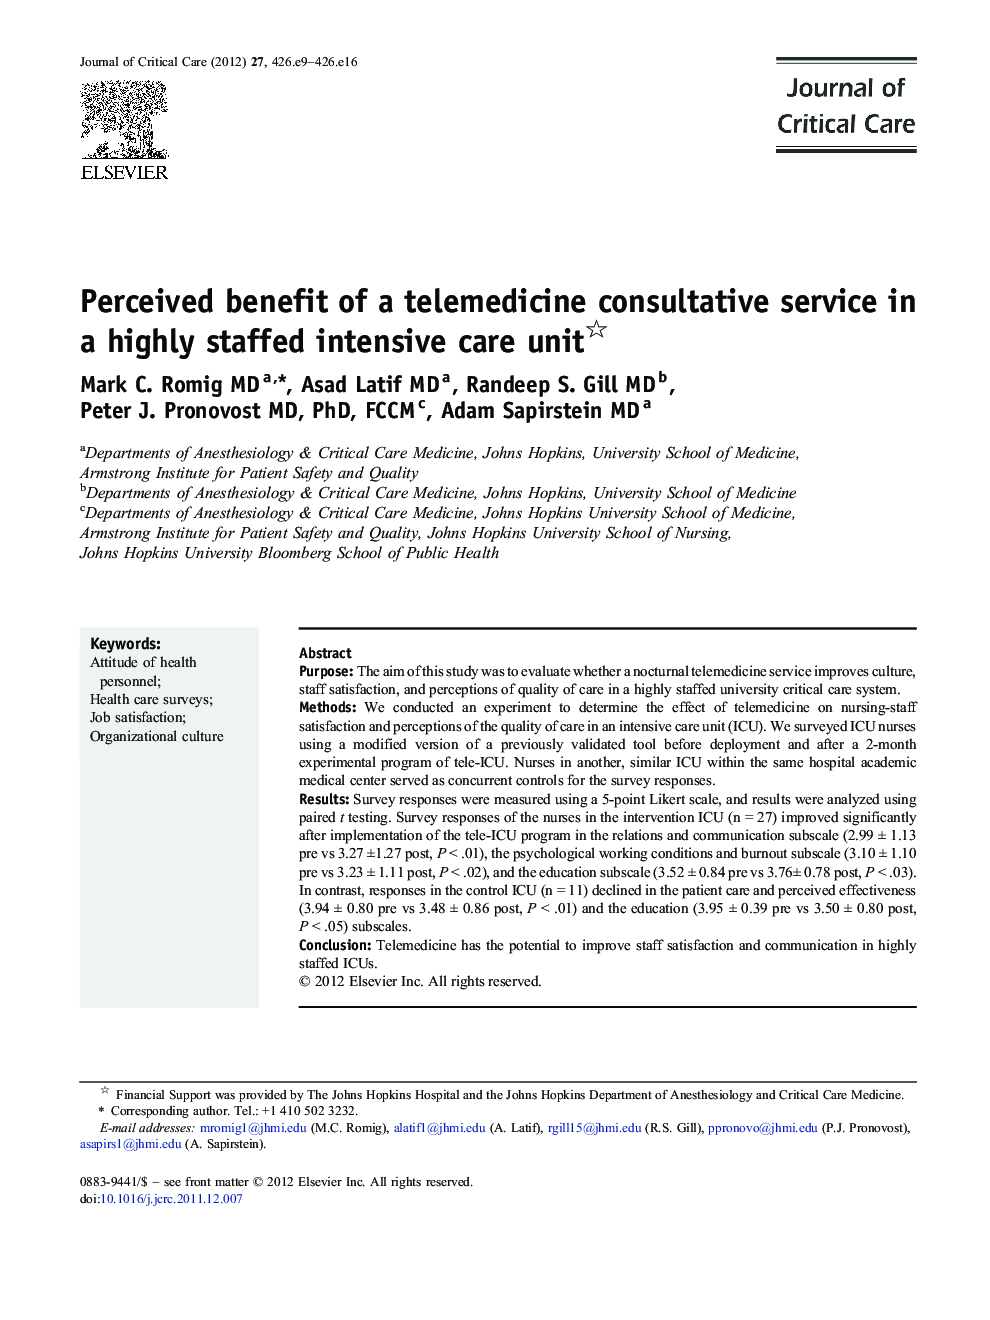 CommunicationPerceived benefit of a telemedicine consultative service in a highly staffed intensive care unit